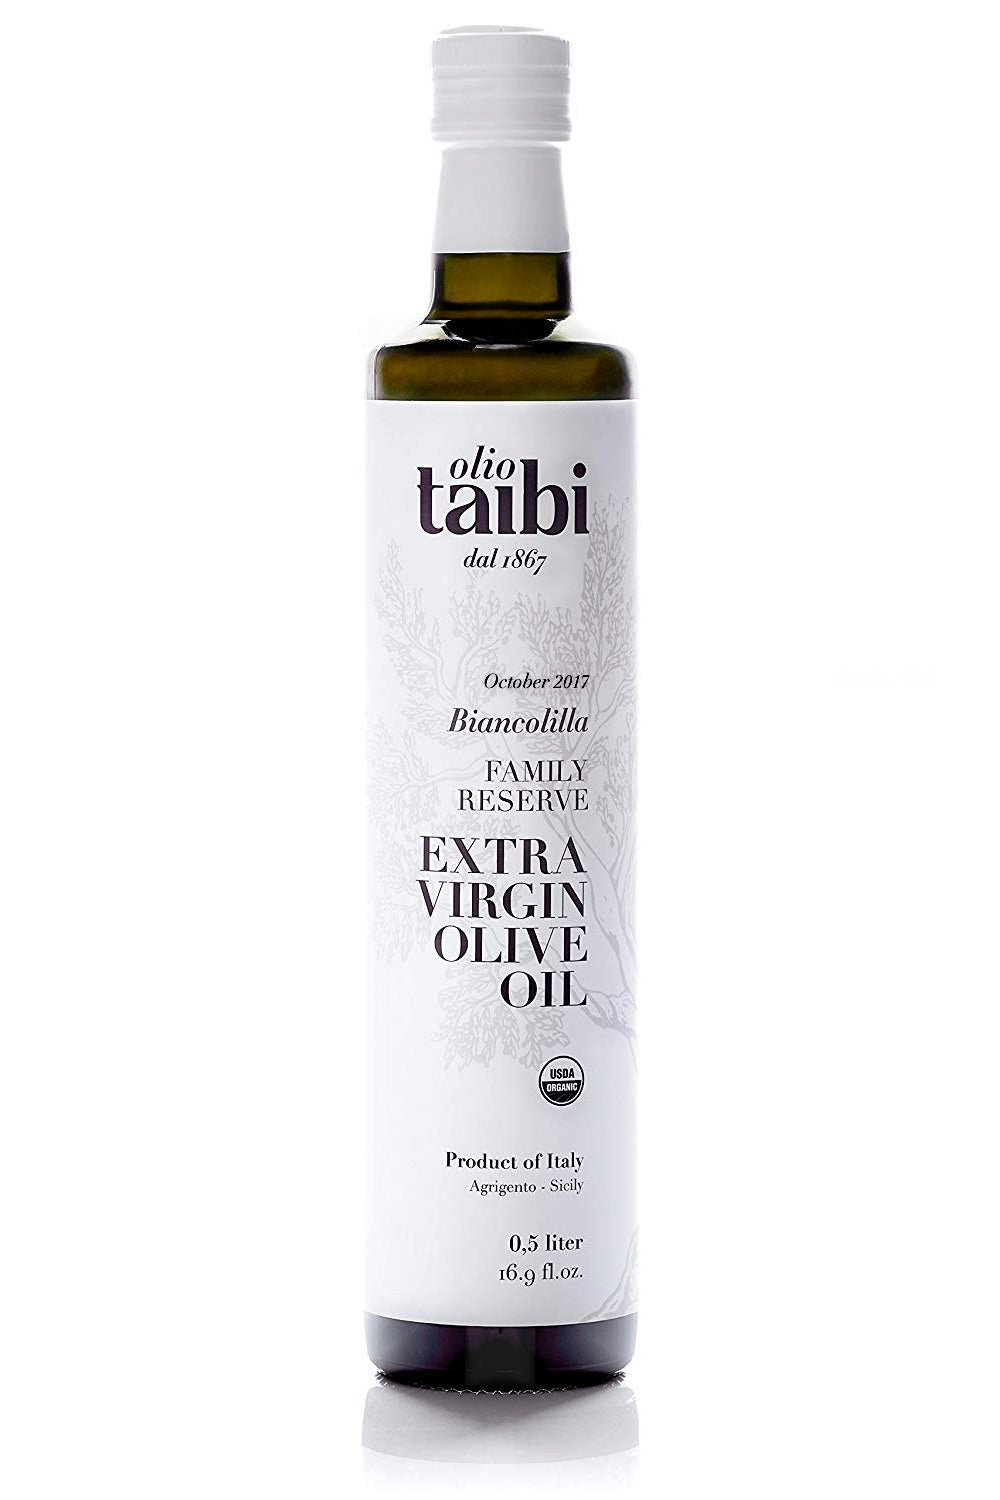 Olio Taibi "Biancolilla" | Award Winning Organic Extra Virgin Olive Oil from Sicily